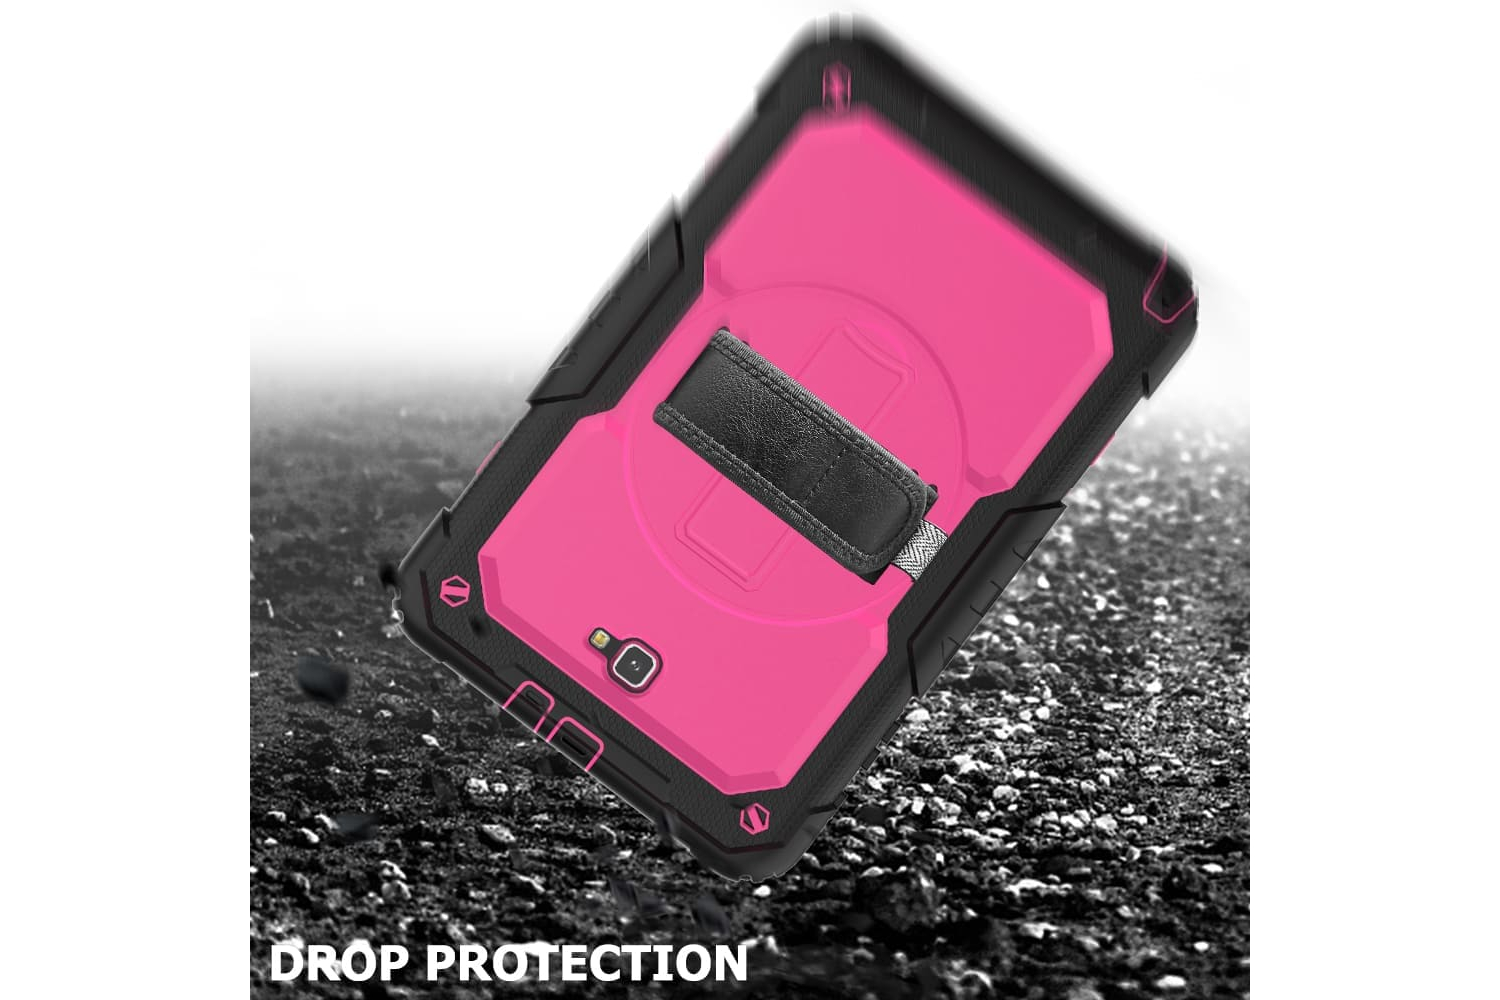 Samsung Tab A 10.1 model 2016 draaibare Bumper Case roze